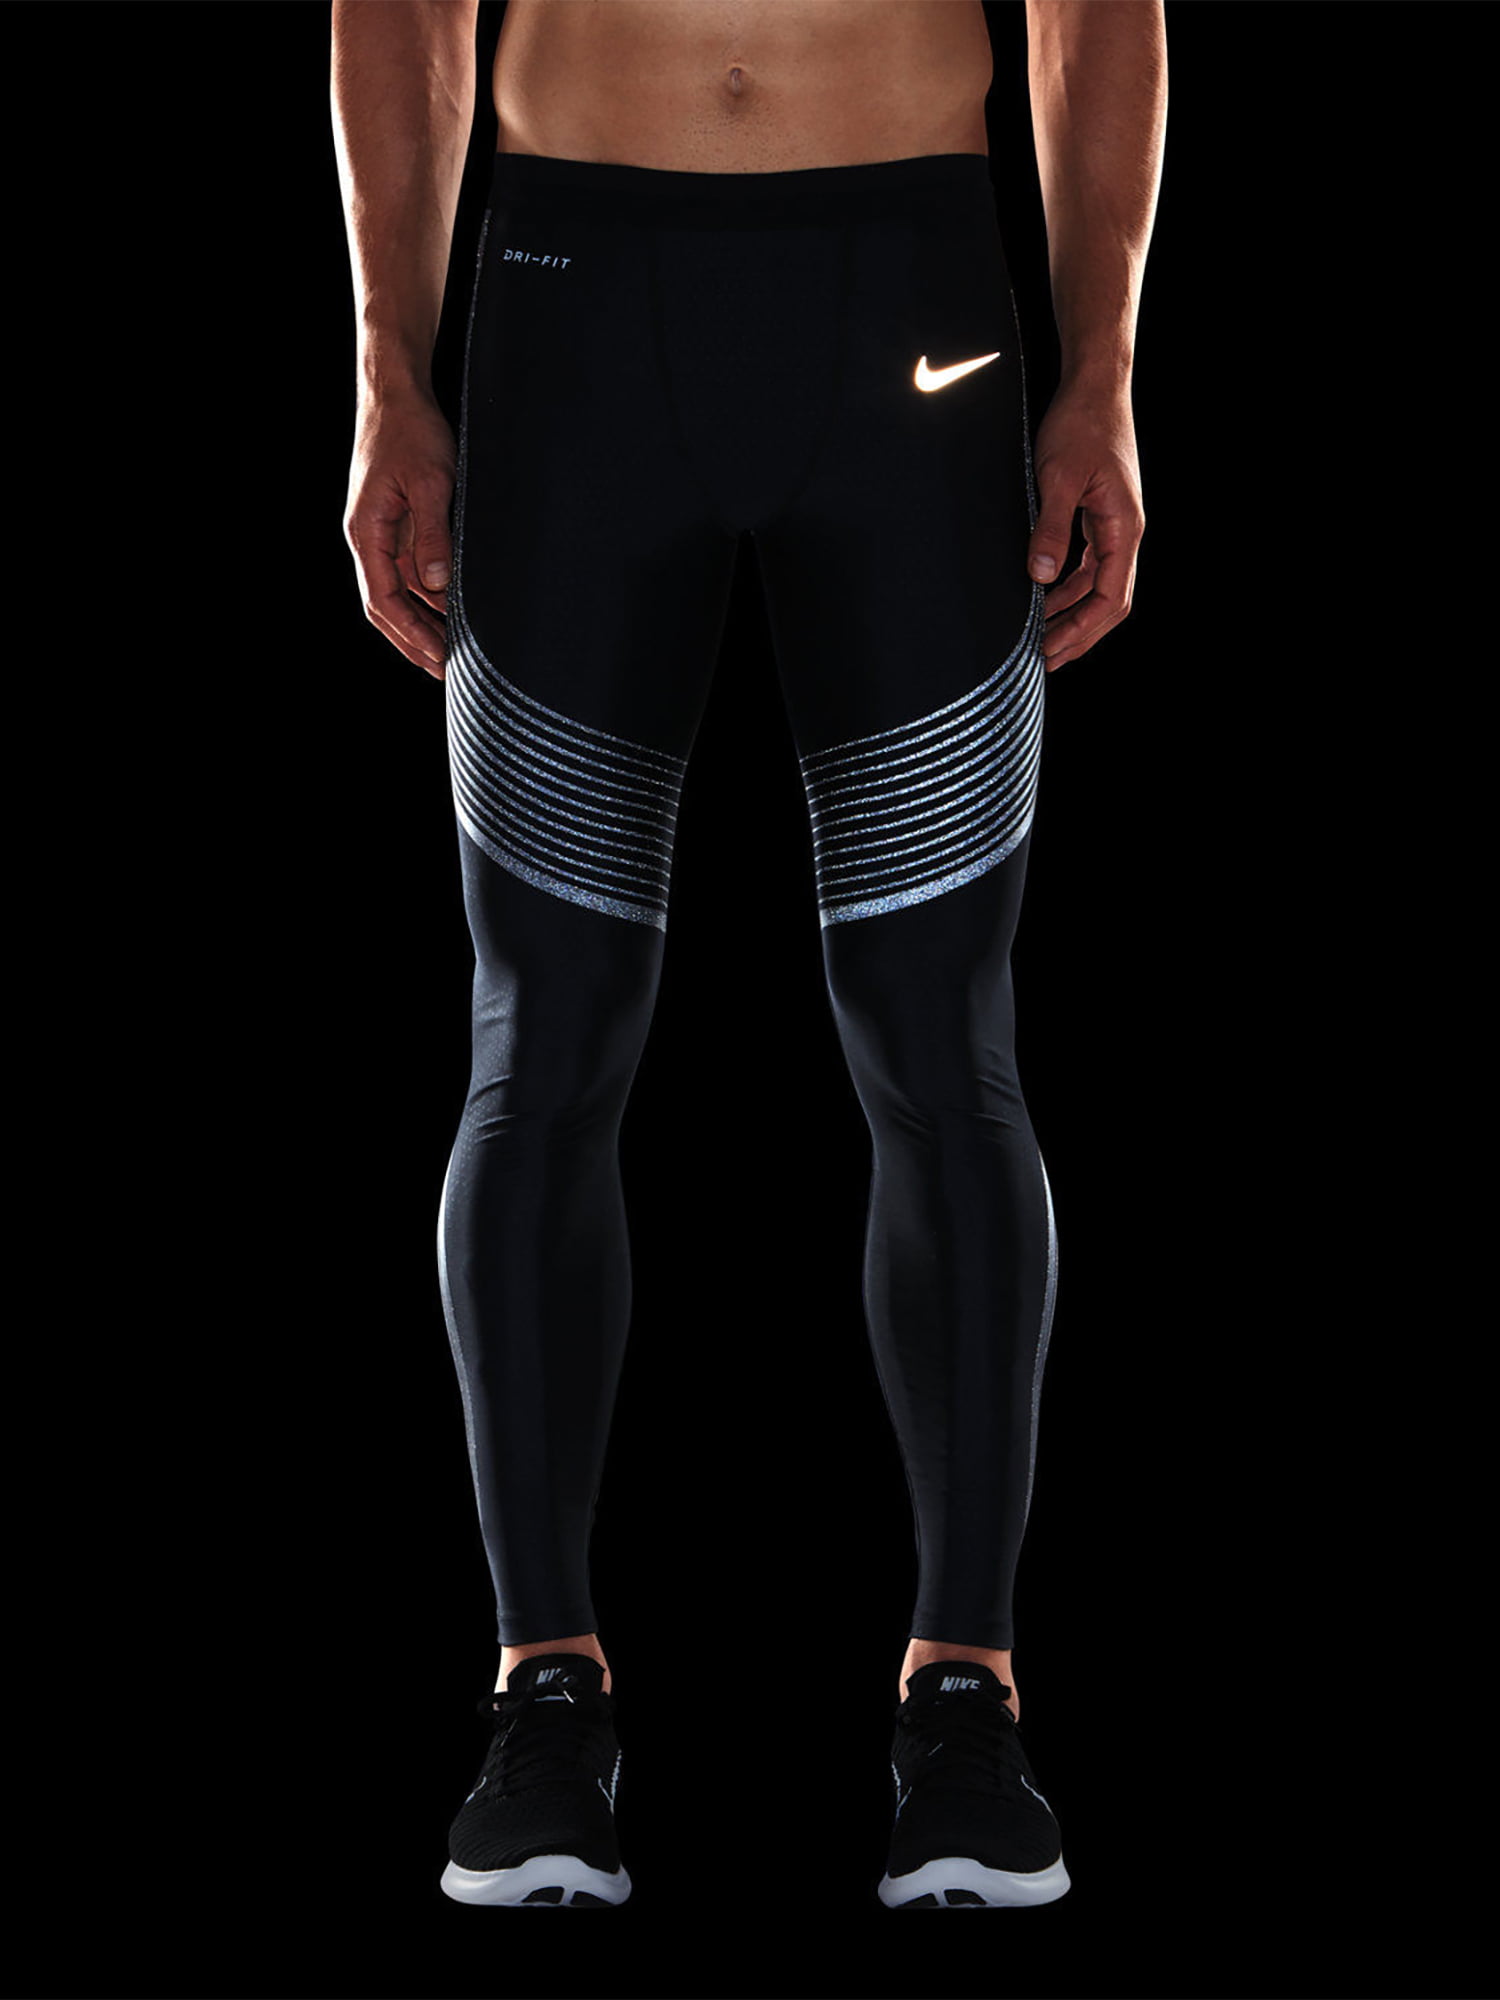 Nike Power Speed Flash Men's Running Tights, Black/Reflective Medium